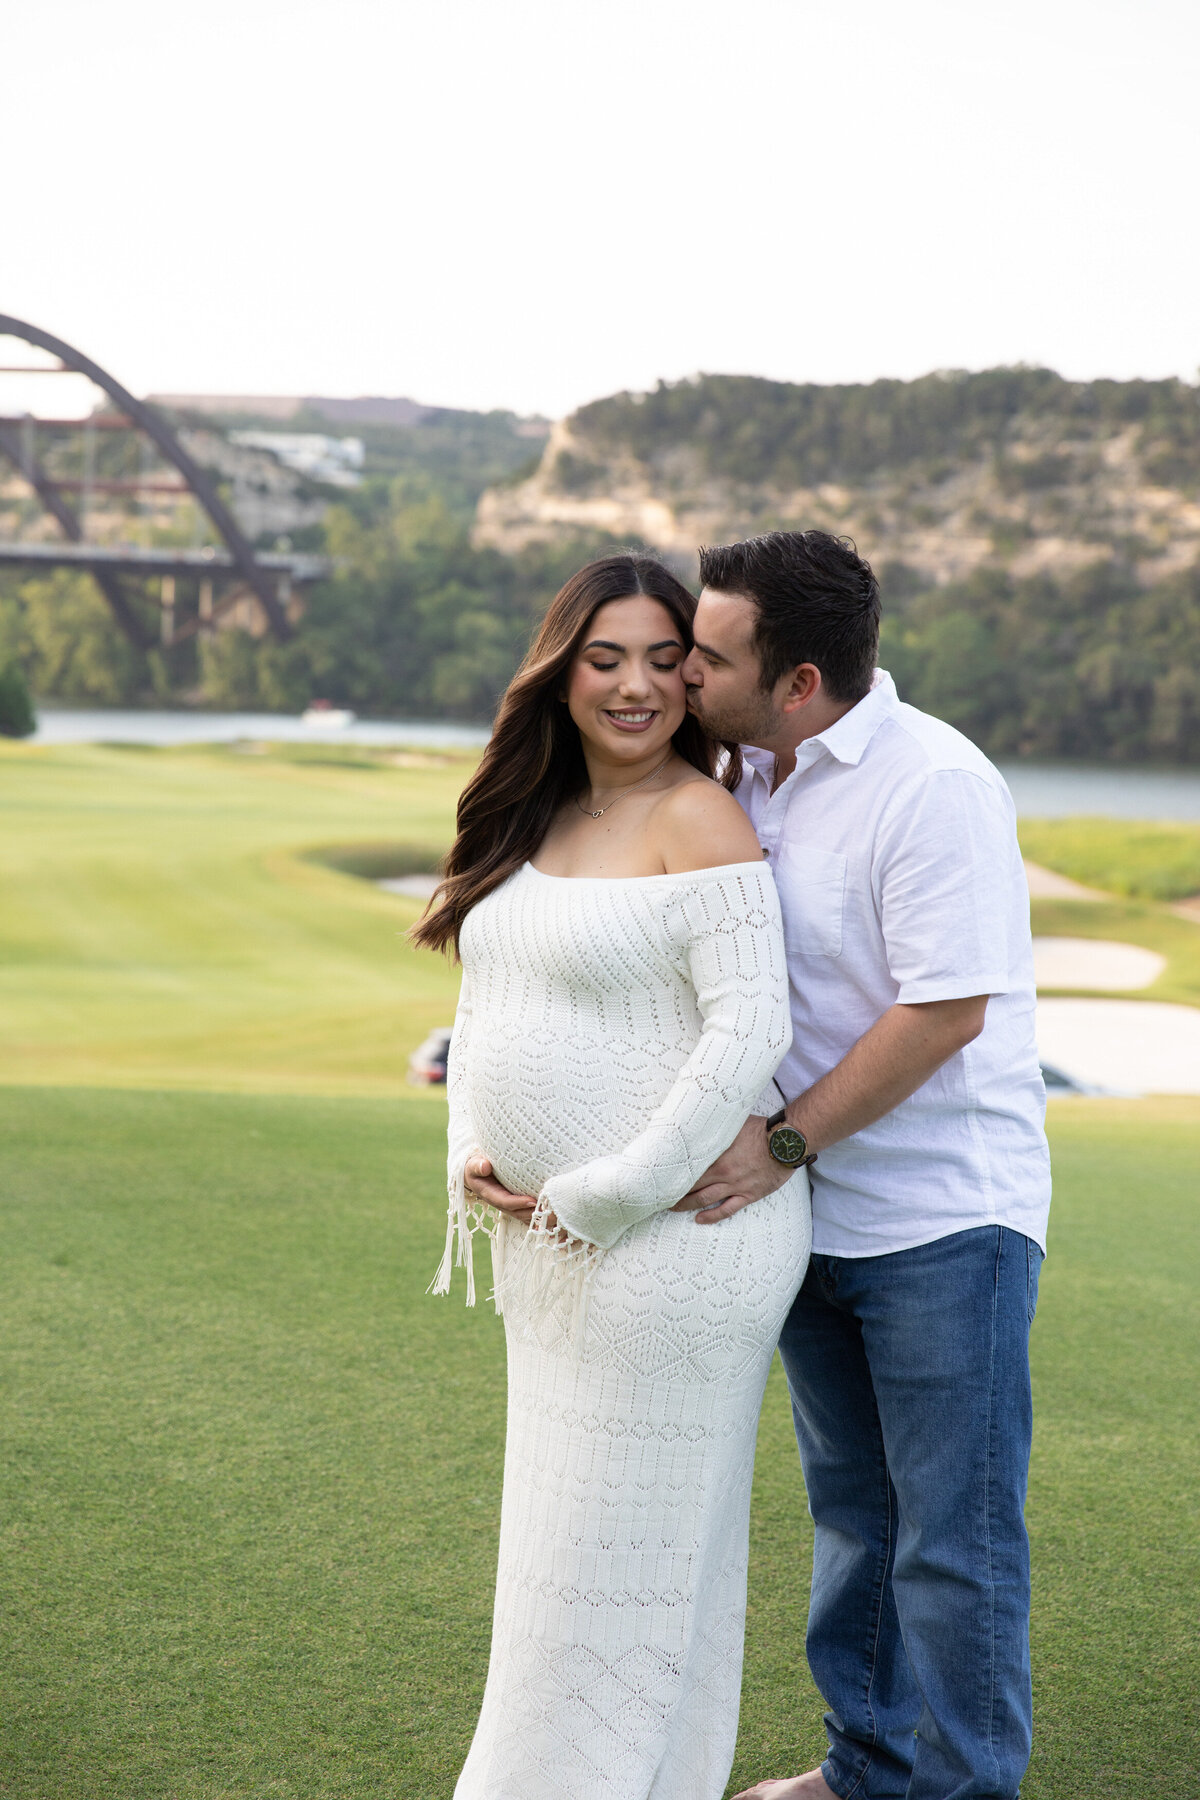 An Austin wedding photographer captures a heartfelt moment as a pregnant couple shares a tender kiss in front of a bridge near a picturesque golf course.